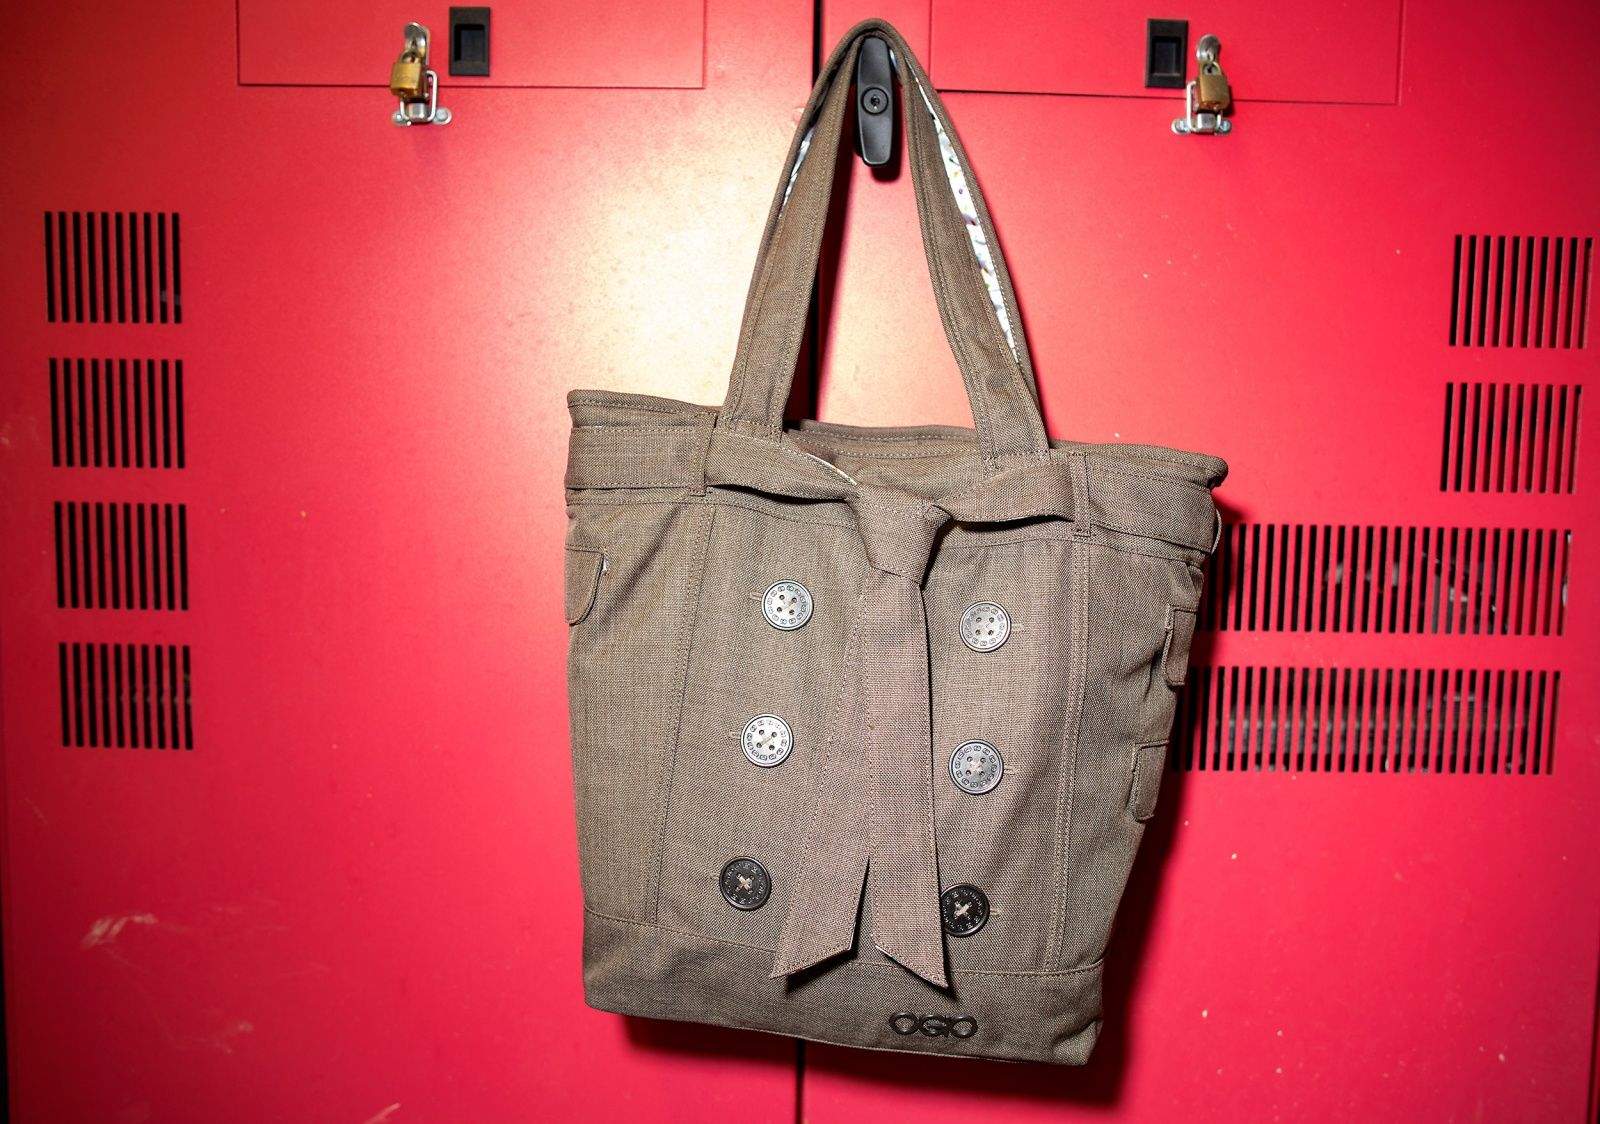 Ogio Hampton bag. Photo: Jim Merithew/Cult of Mac